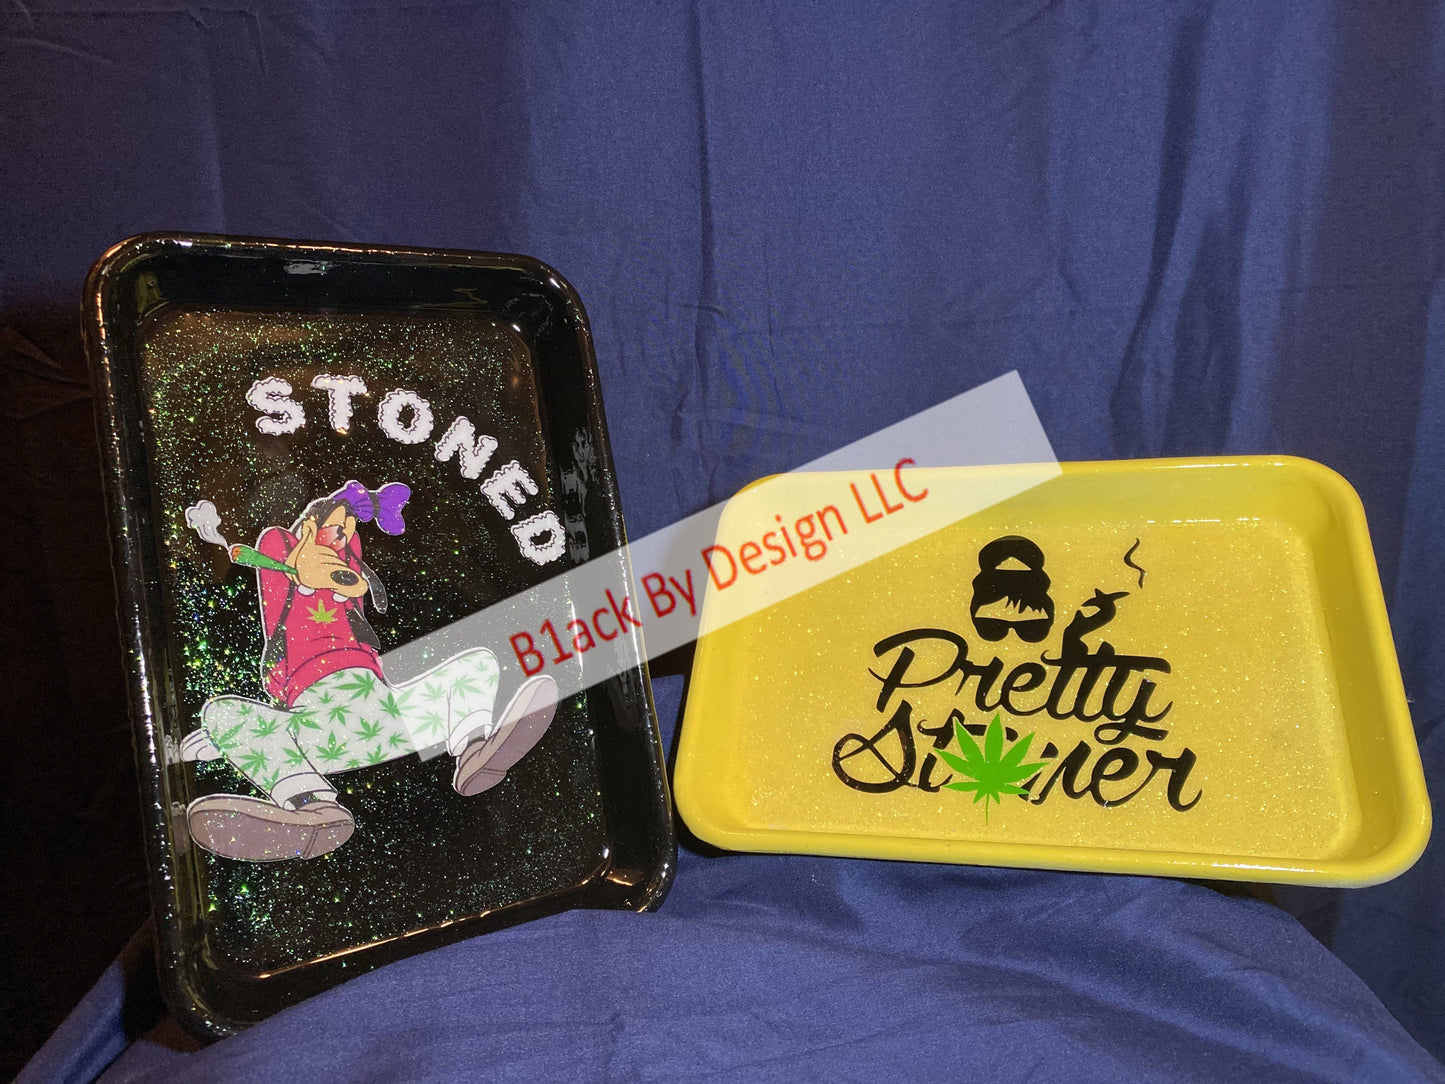 Custom Tray - Pretty Stoner/Stoned B1ack By Design LLC 